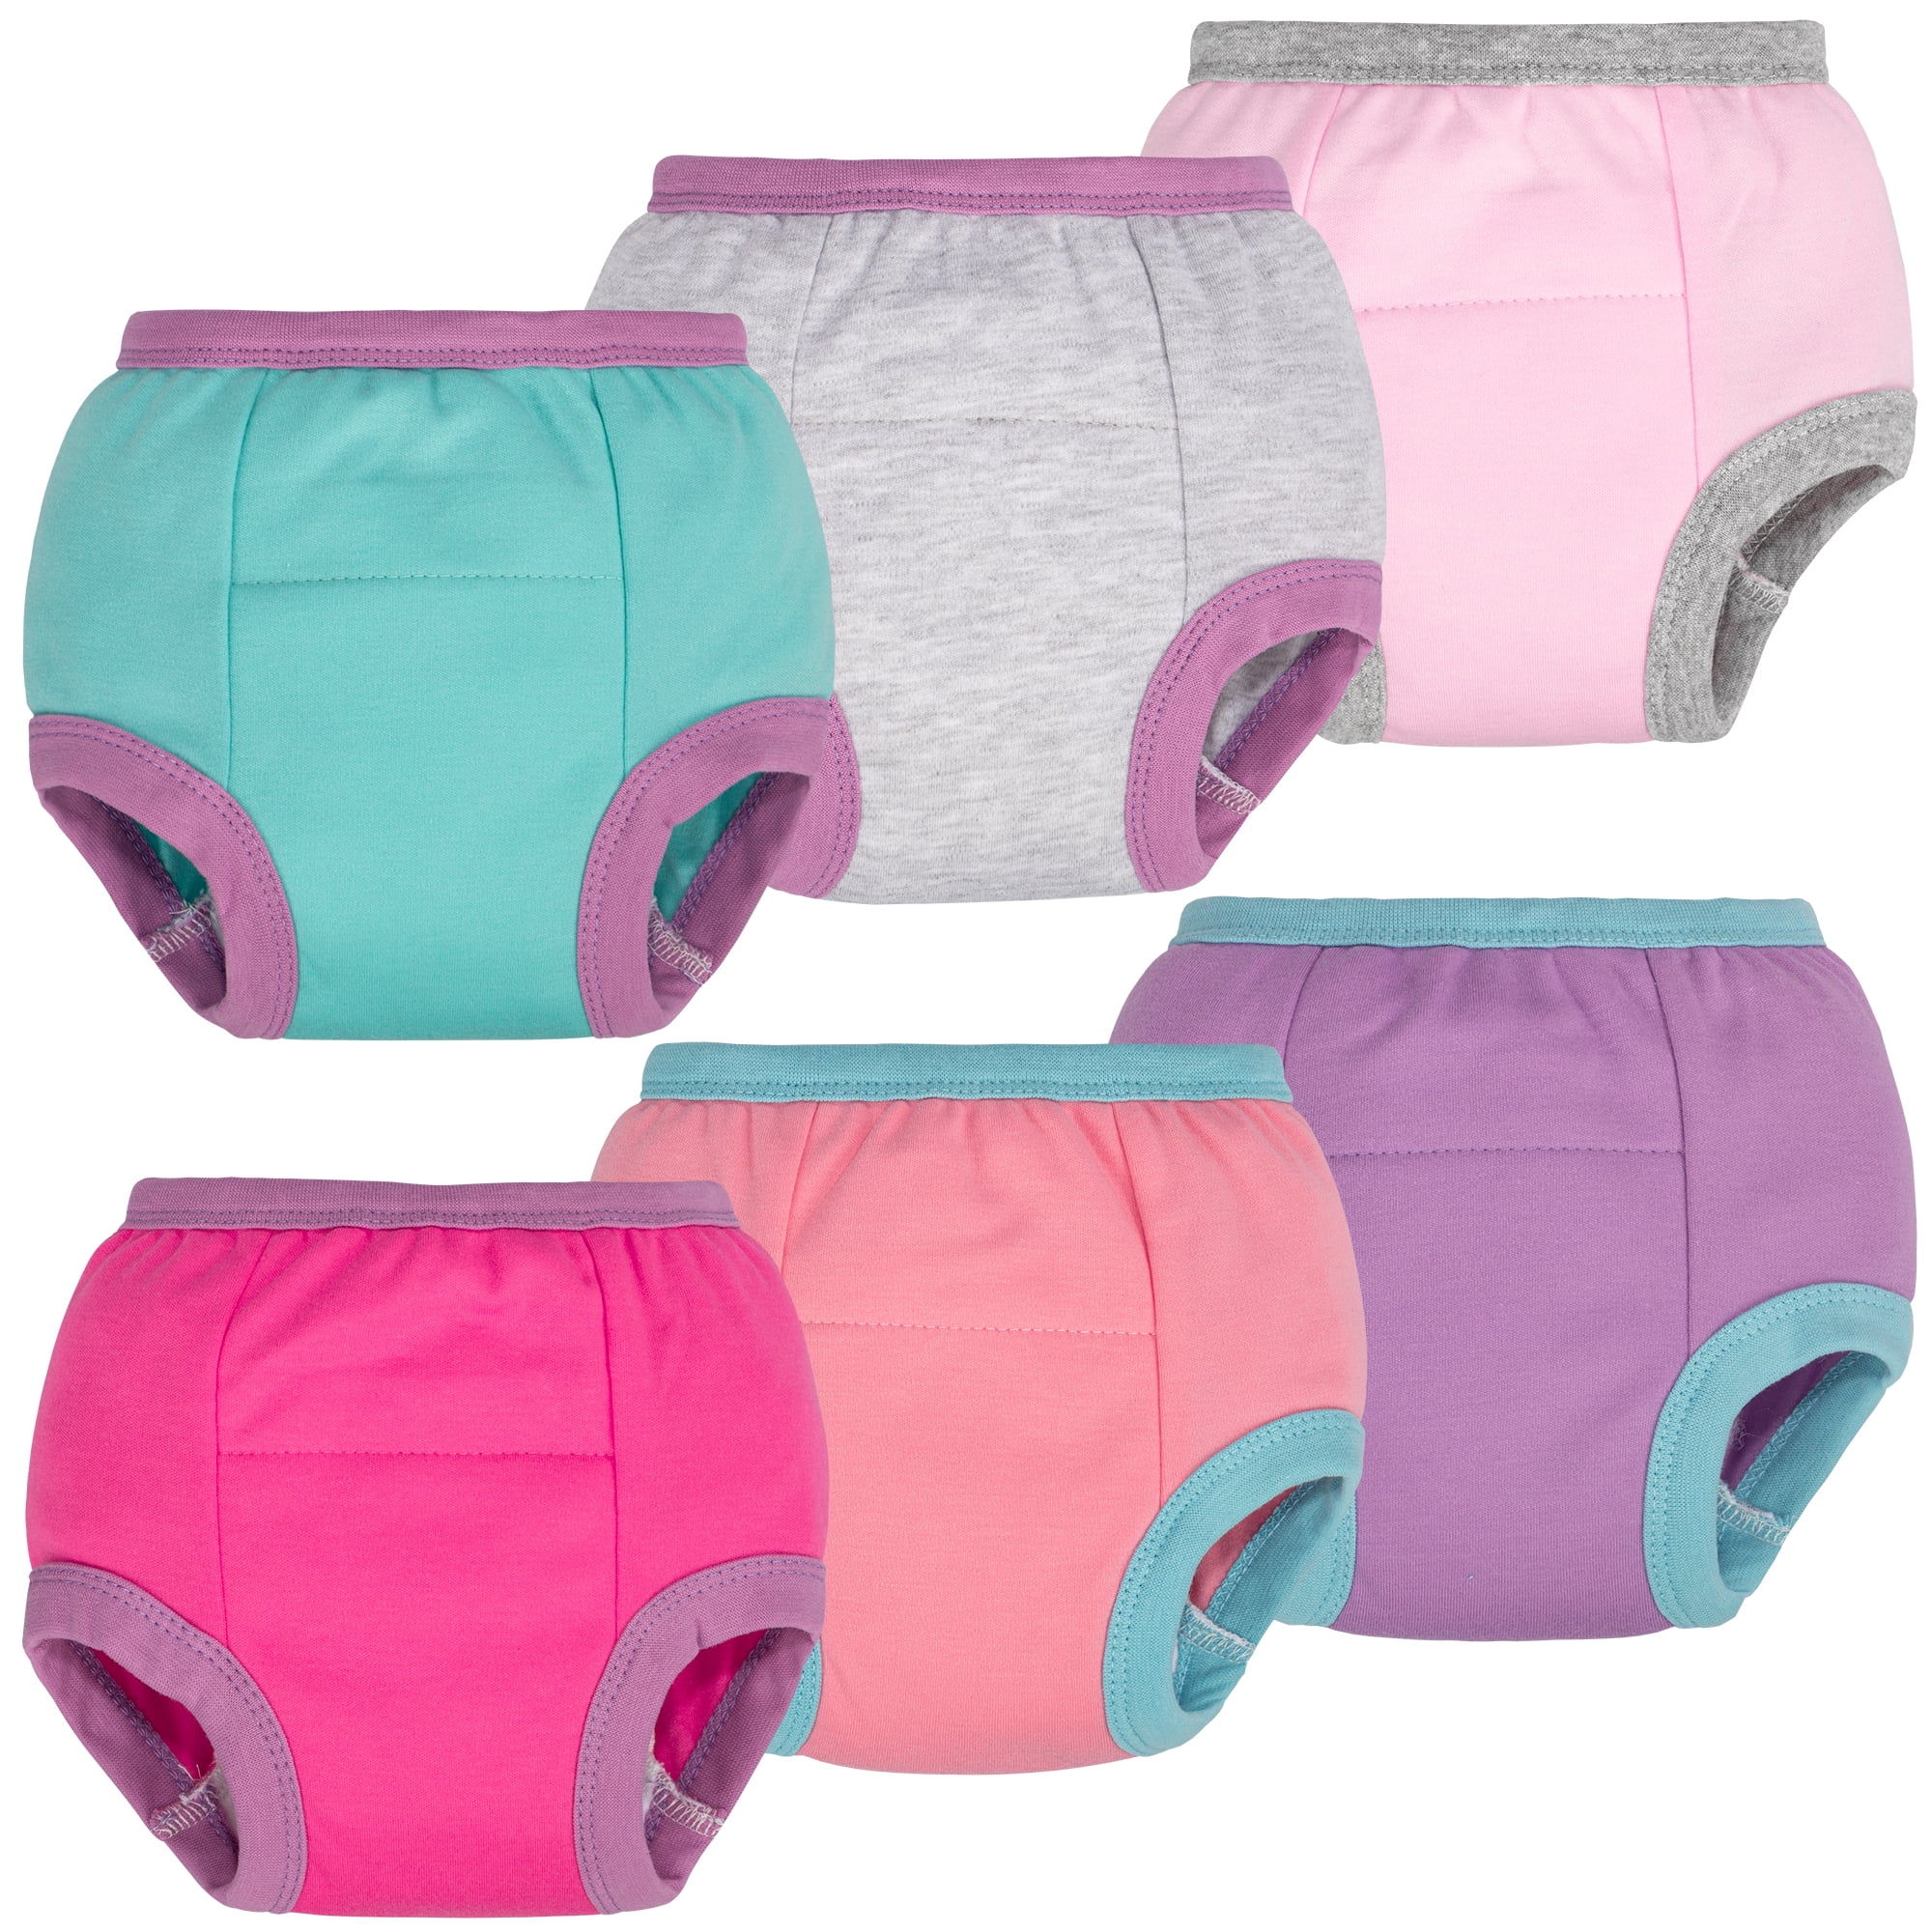 BIG ELEPHANT Toddler Potty Training Pants, Cotton Soft Training Underwear  for Girls, 12-24 Months